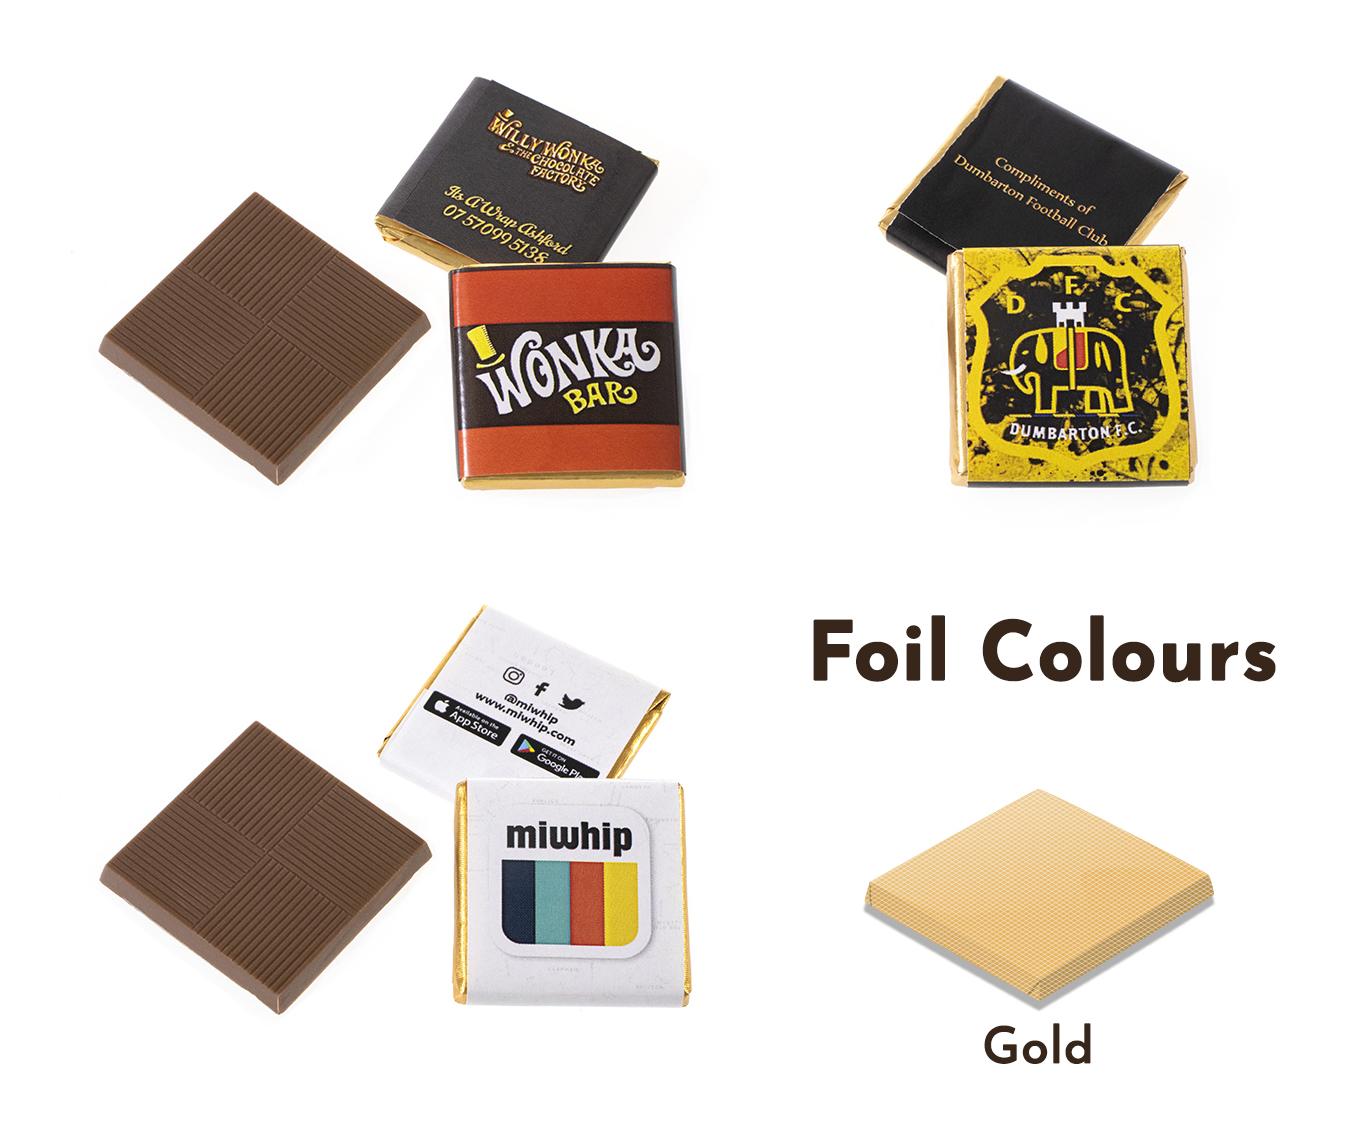 Gold foil custom logo printed chocolate for tradeshows